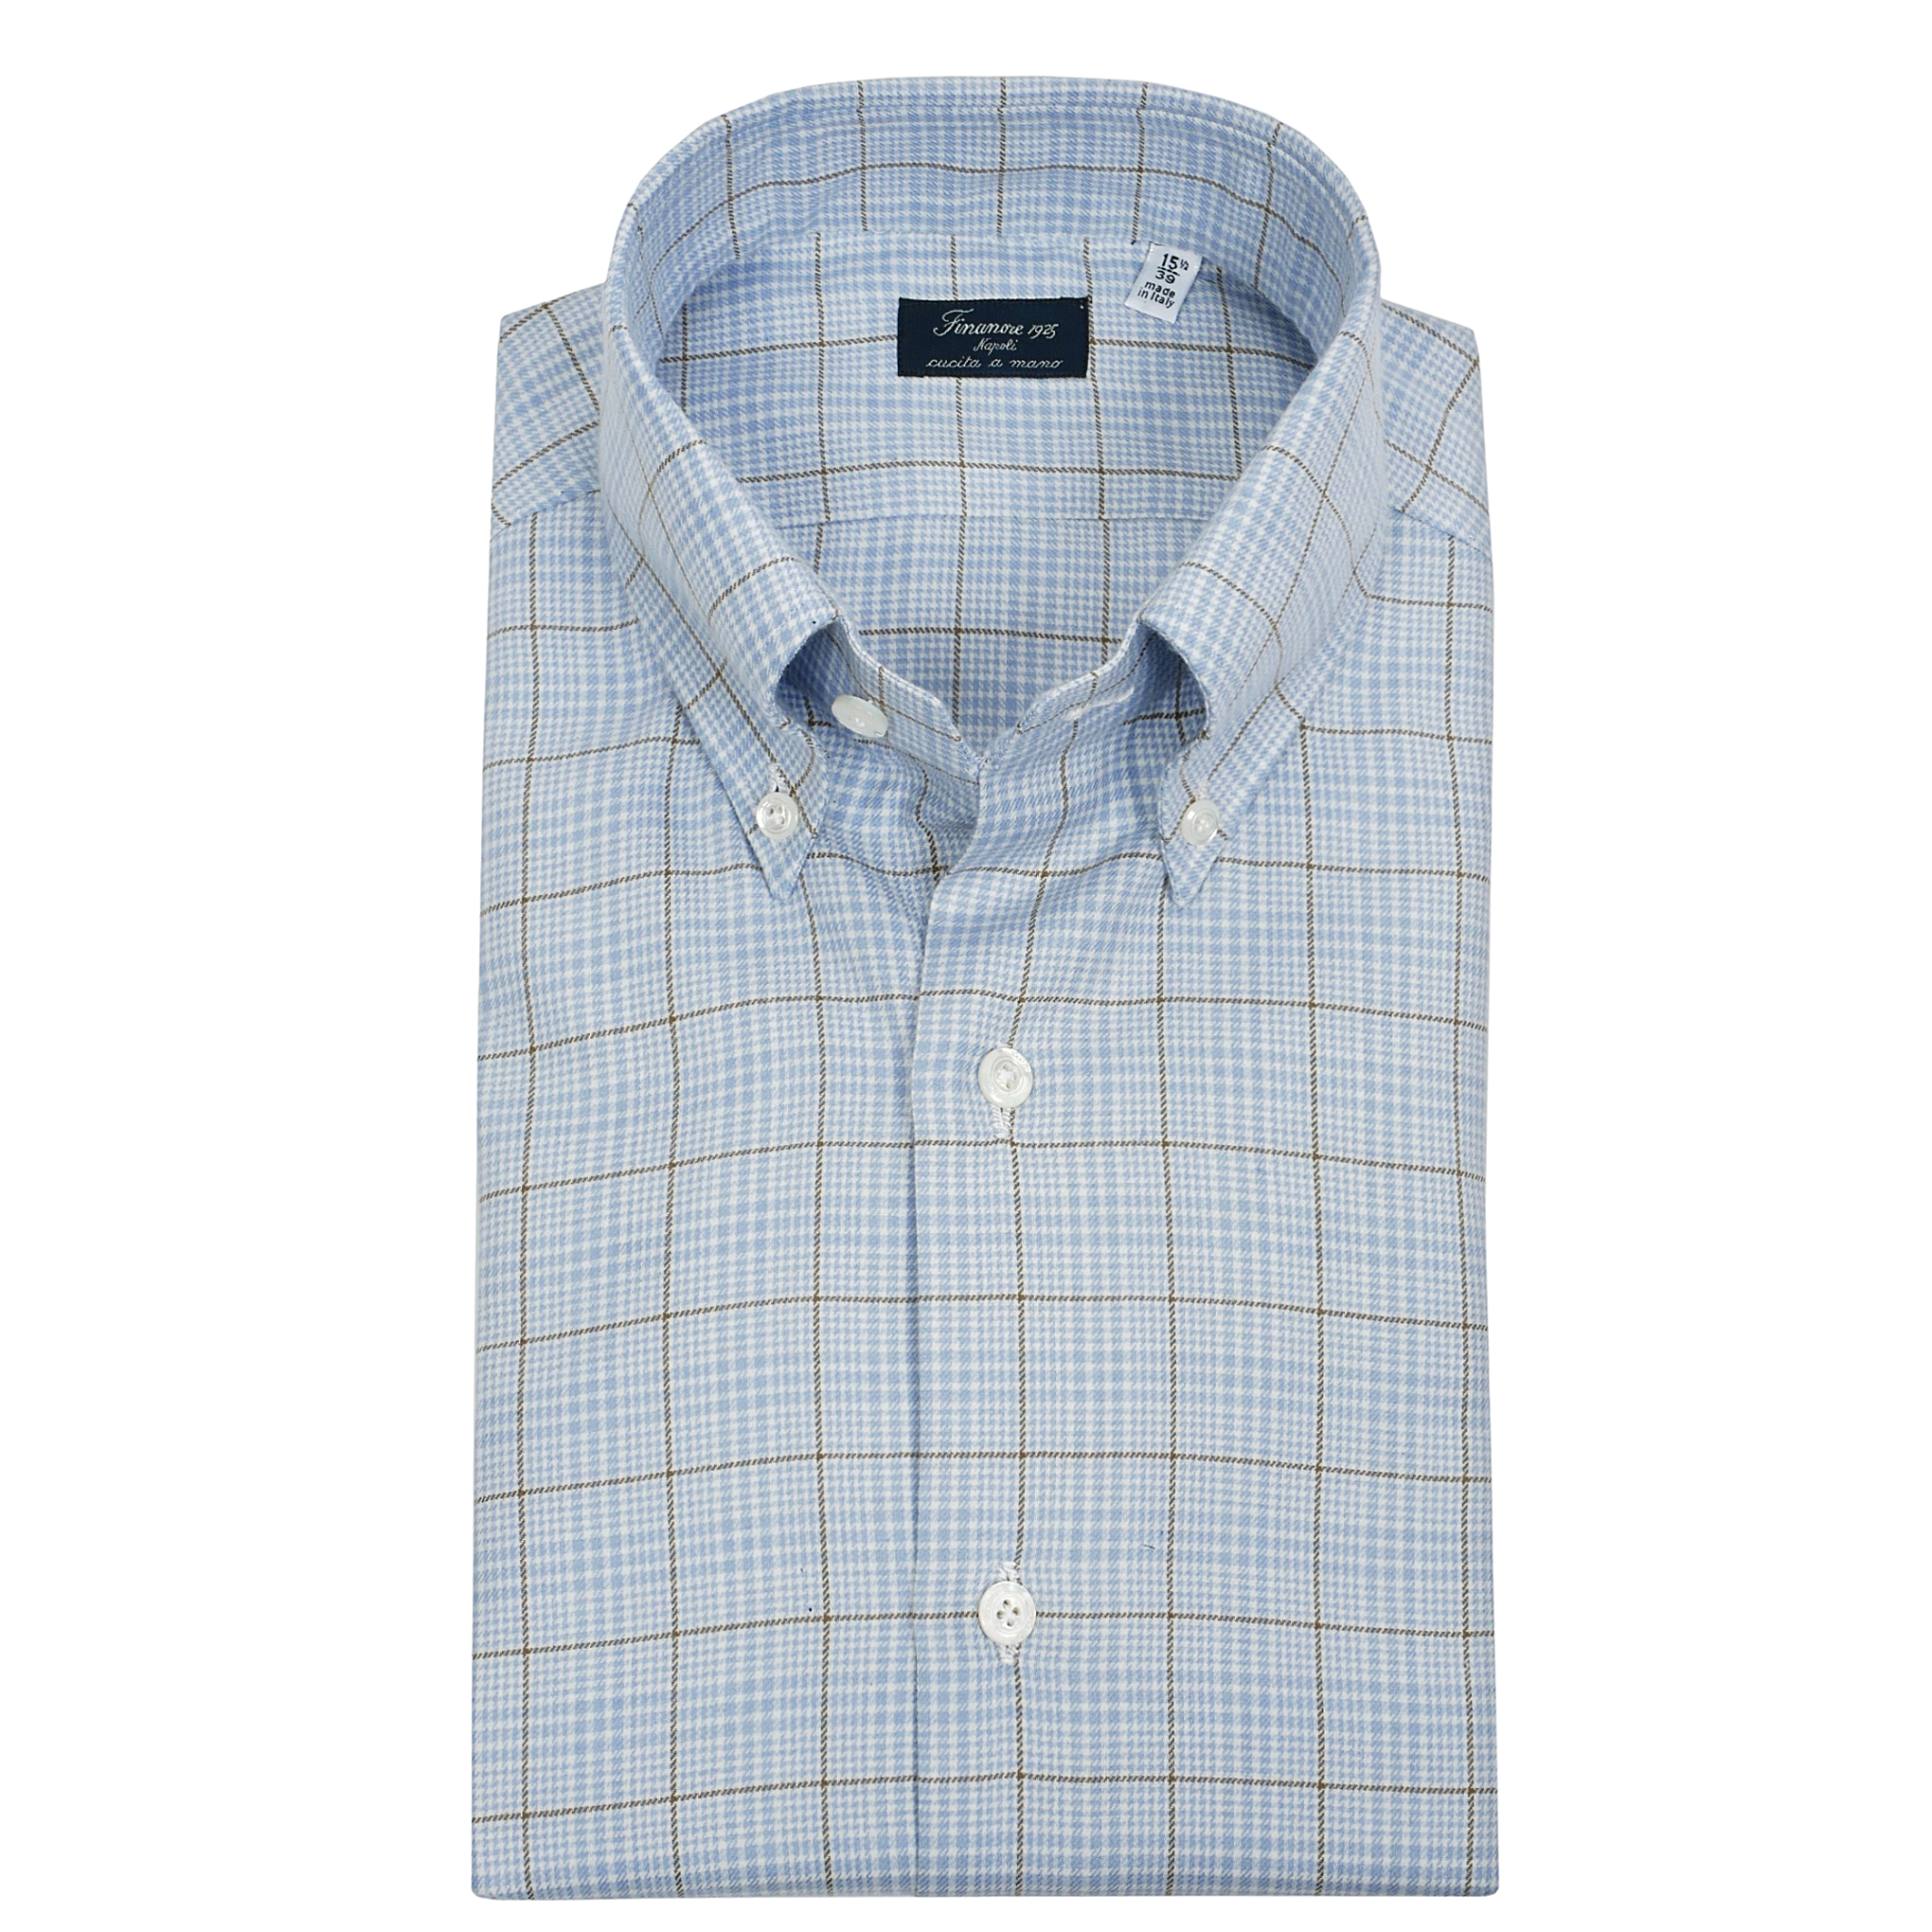 Regular fit shirt Napoli button down cotton cashmere light blue and beige Finamore 1925